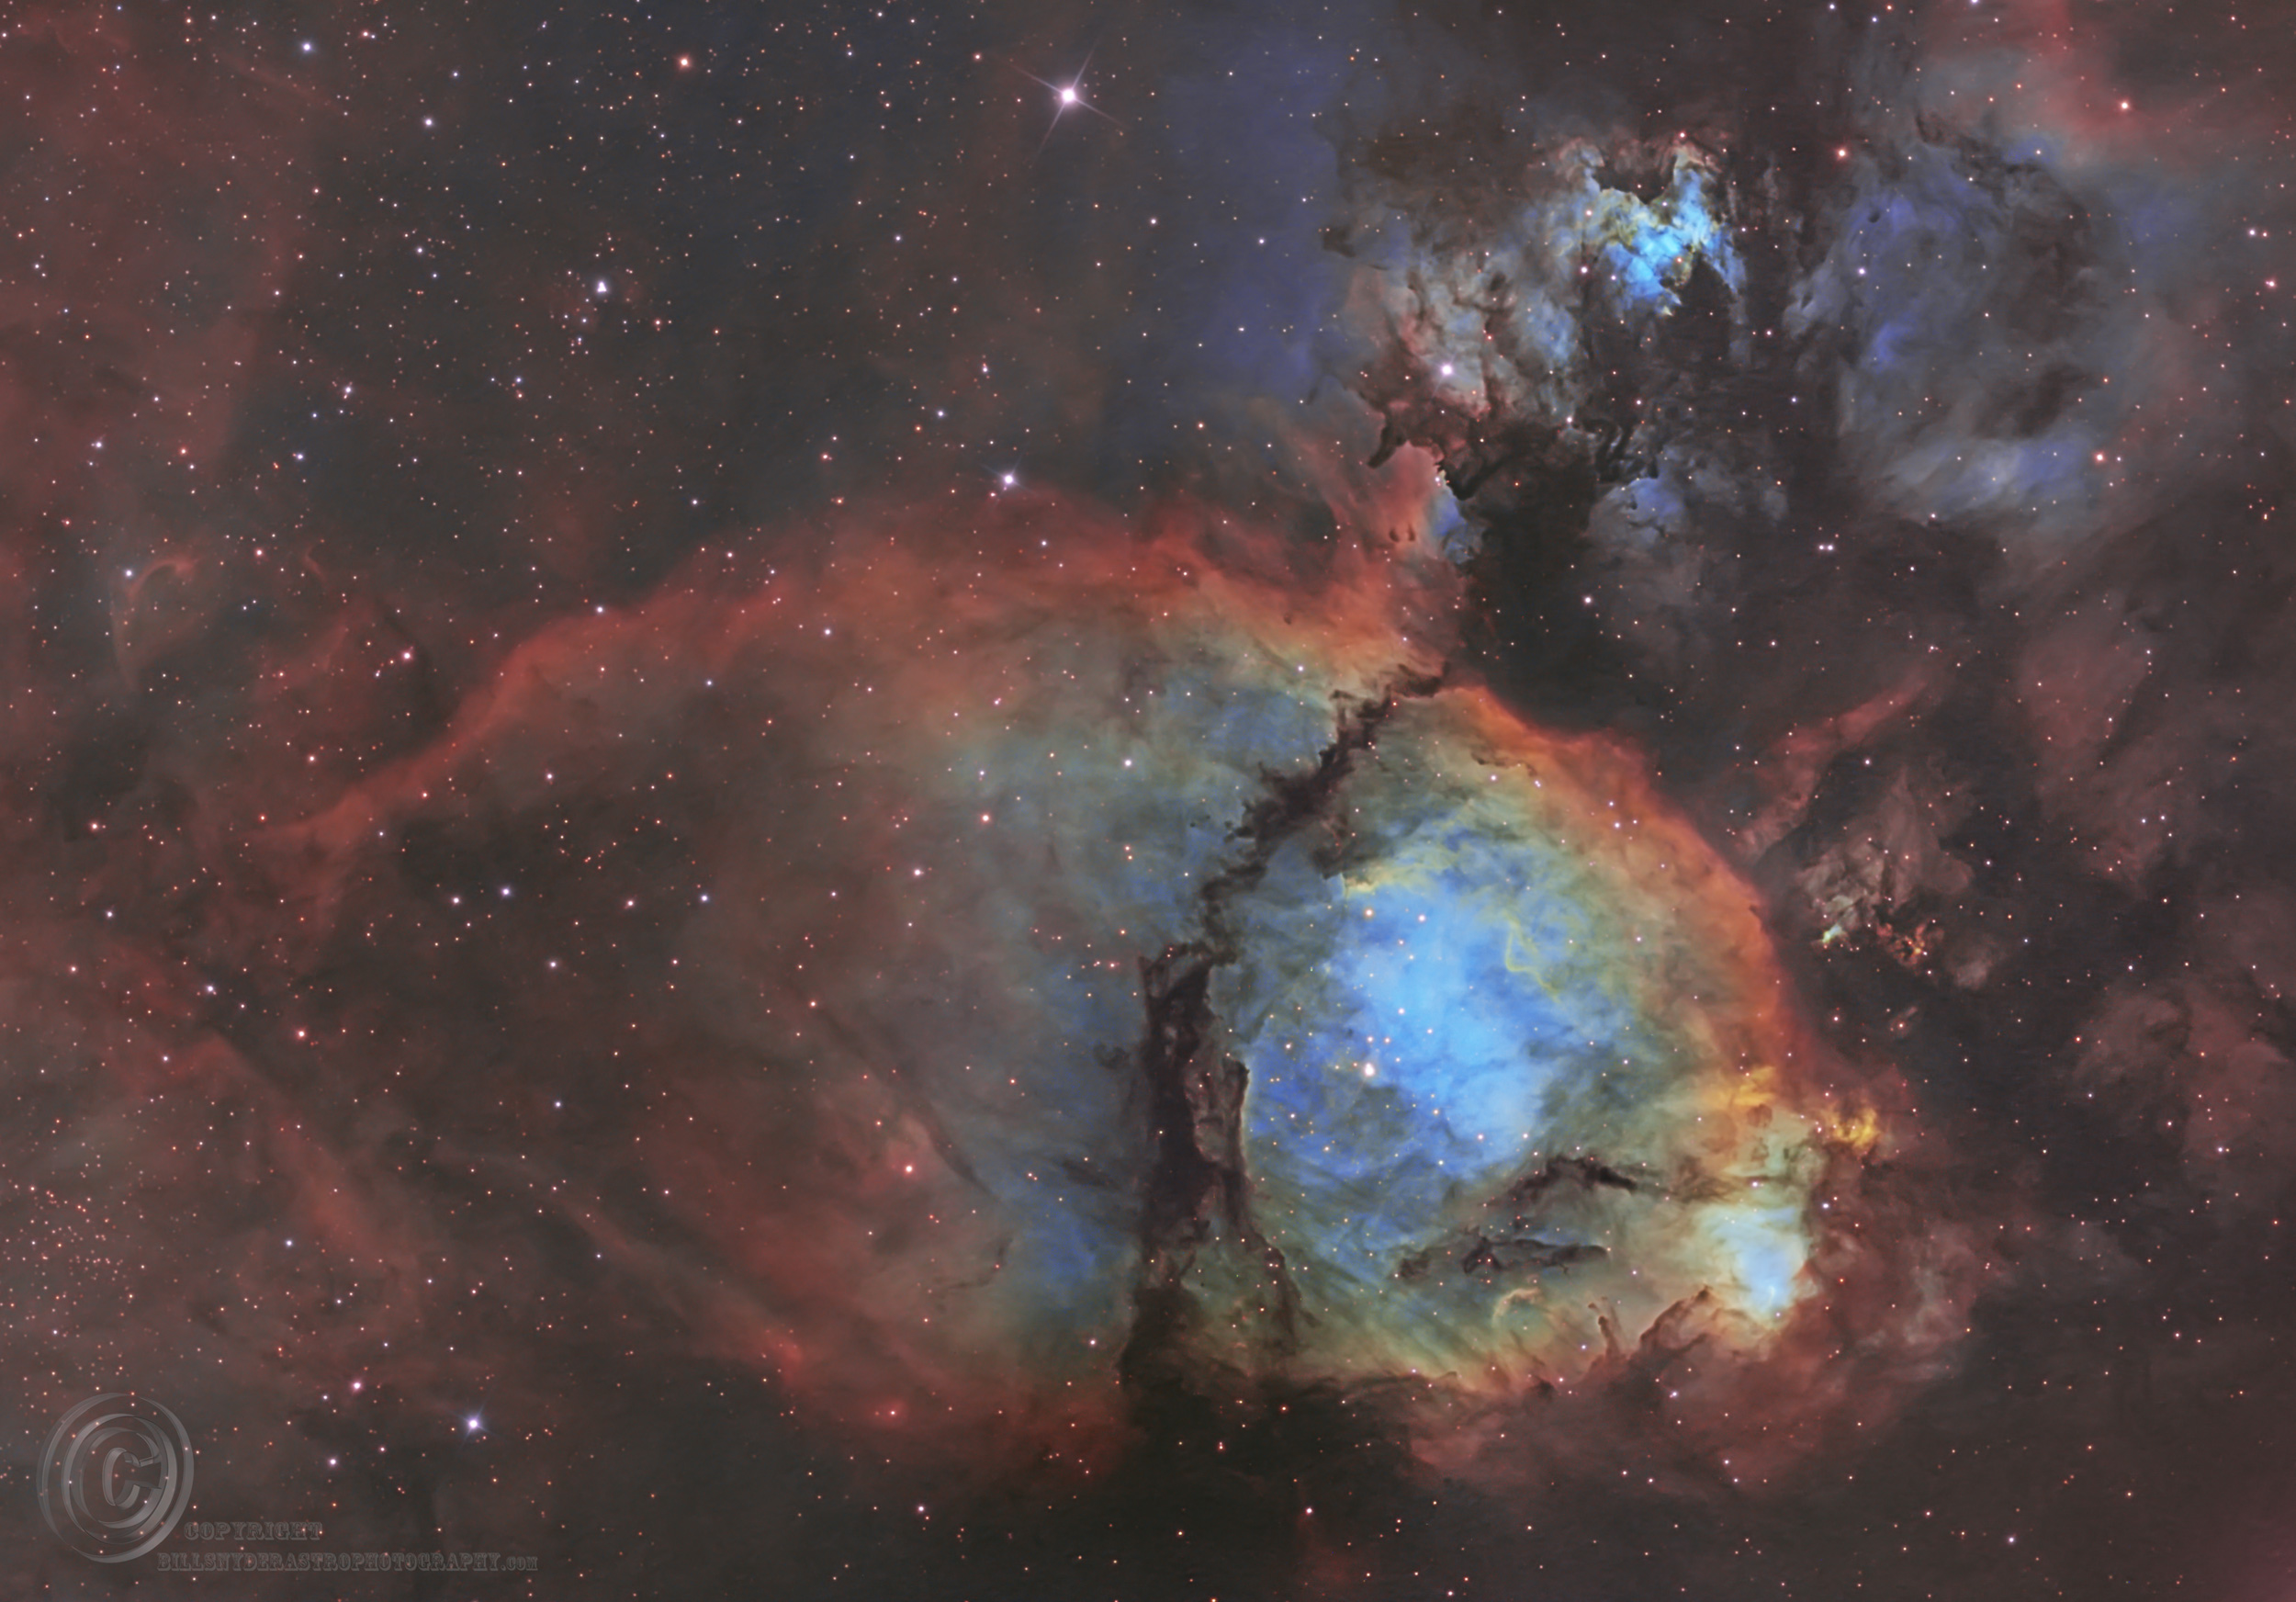 APOD: 2014 December 24 - IC 1795: The Fishhead Nebula